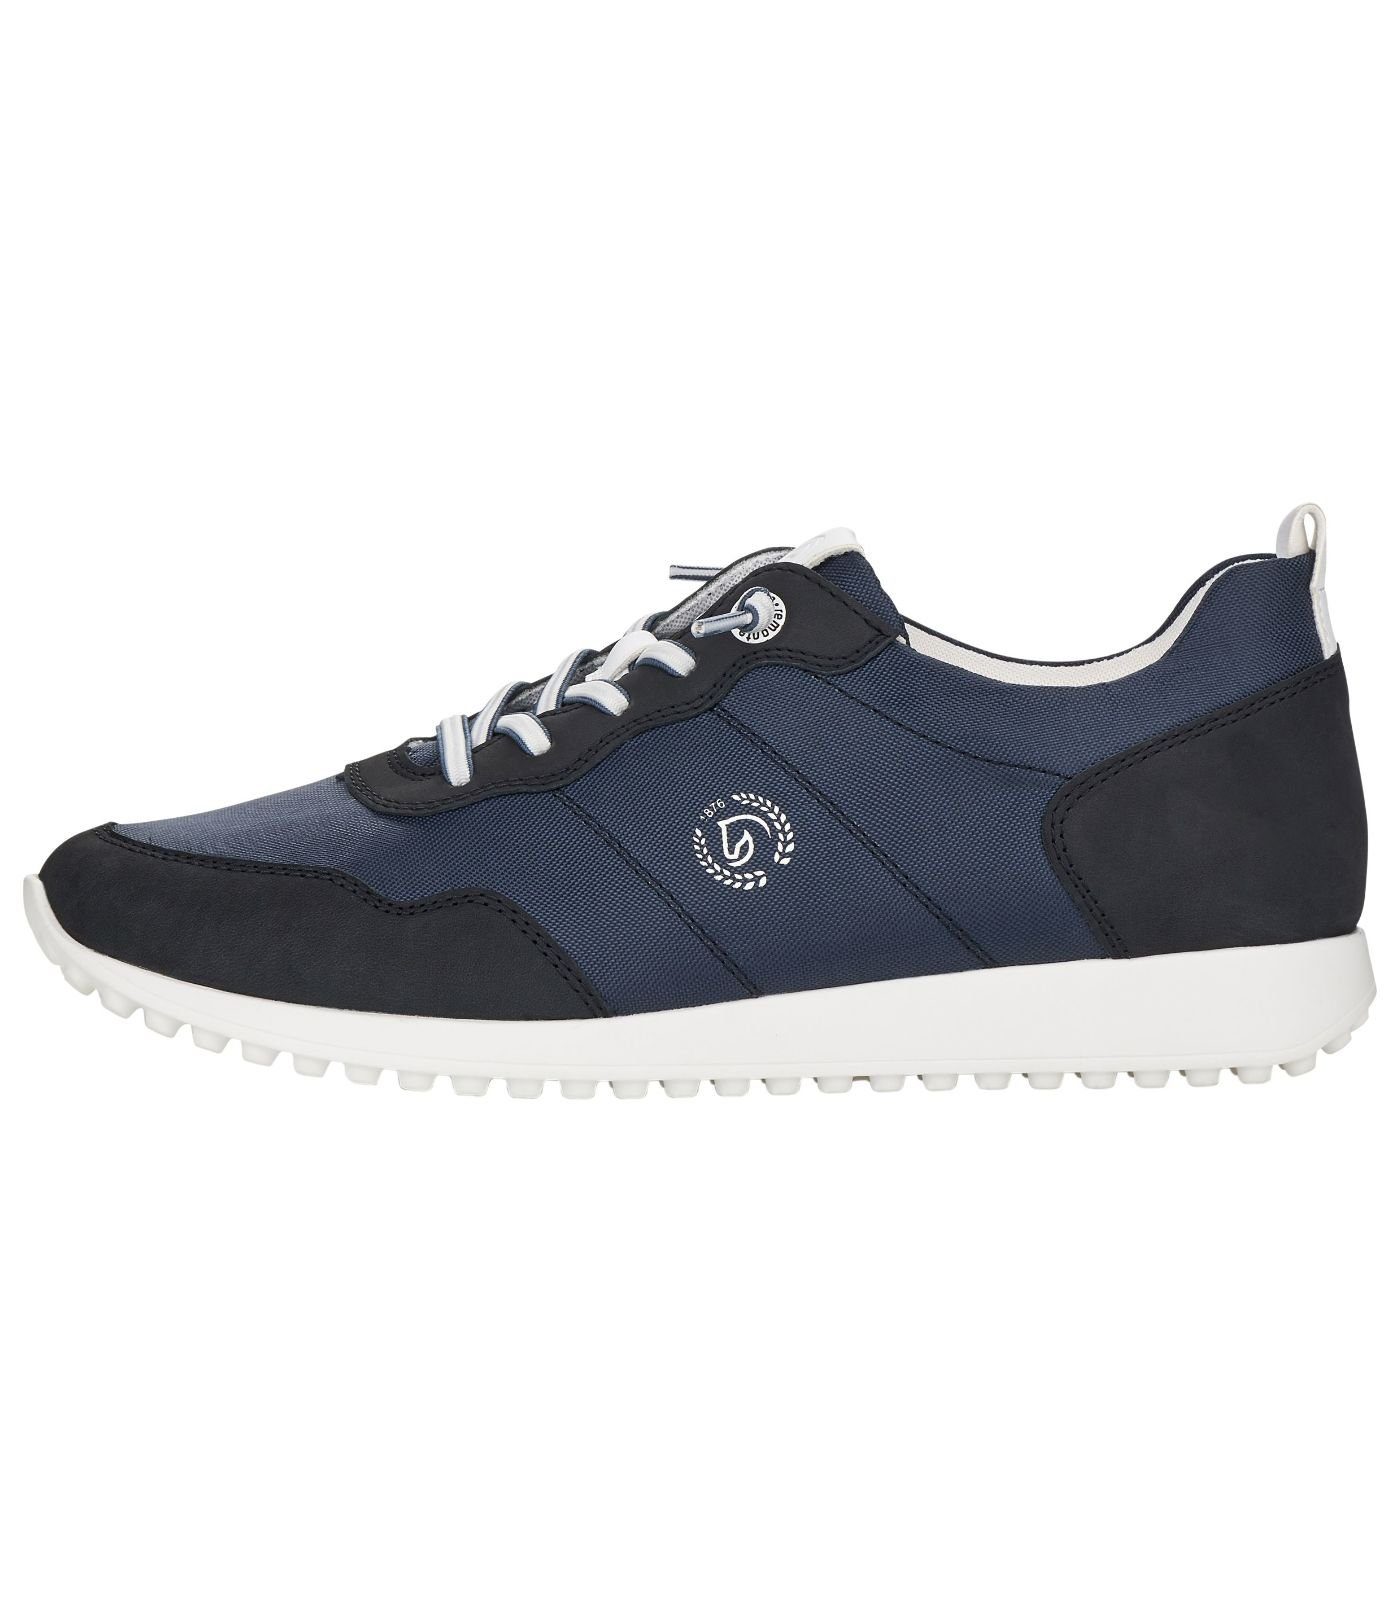 Lederimitat/Textil Sneaker Sneaker Remonte